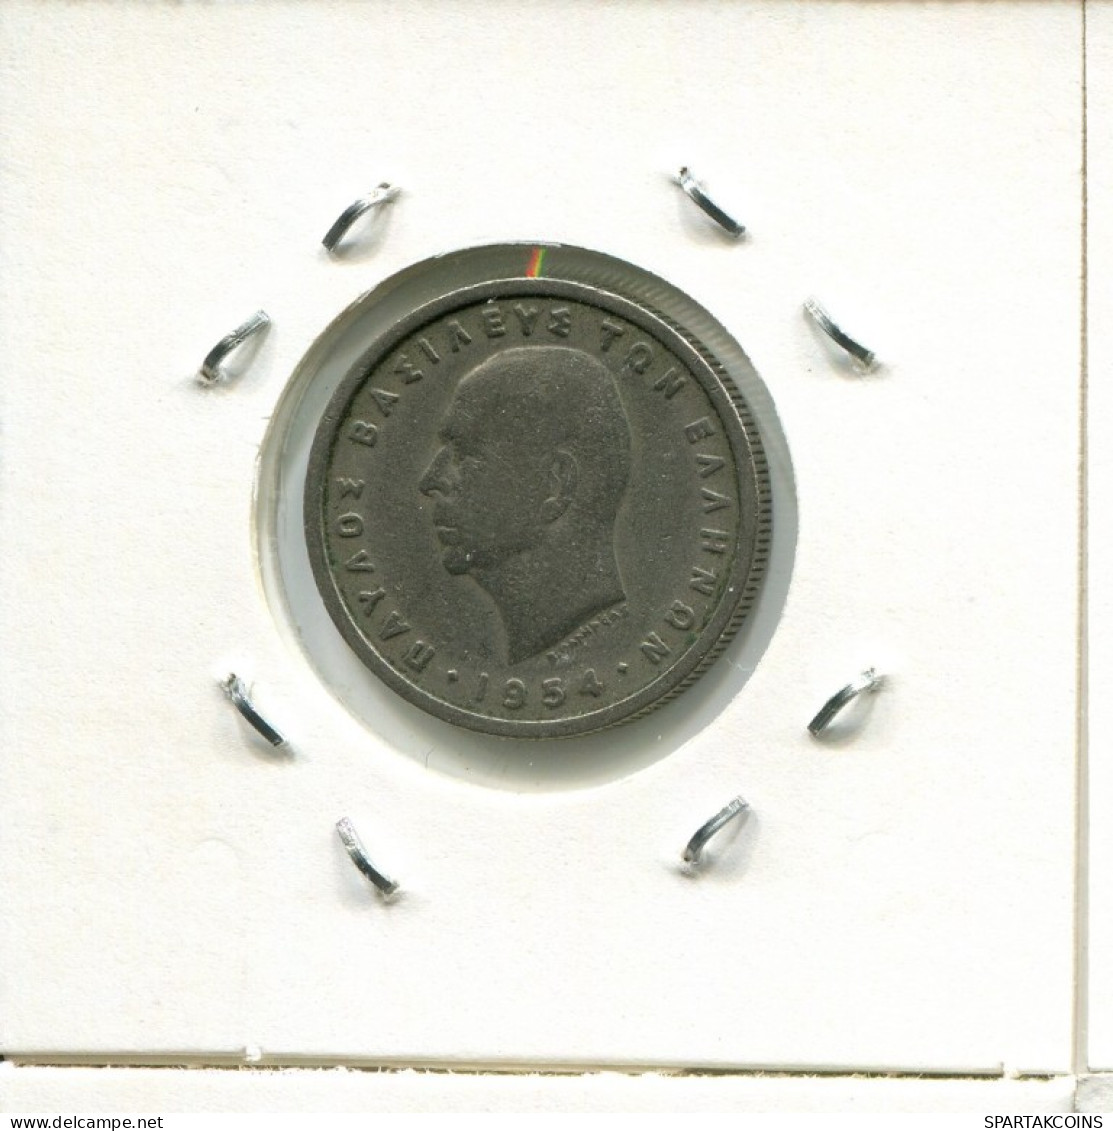 1 DRACHMA 1954 GREECE Coin #AK349.U.A - Greece